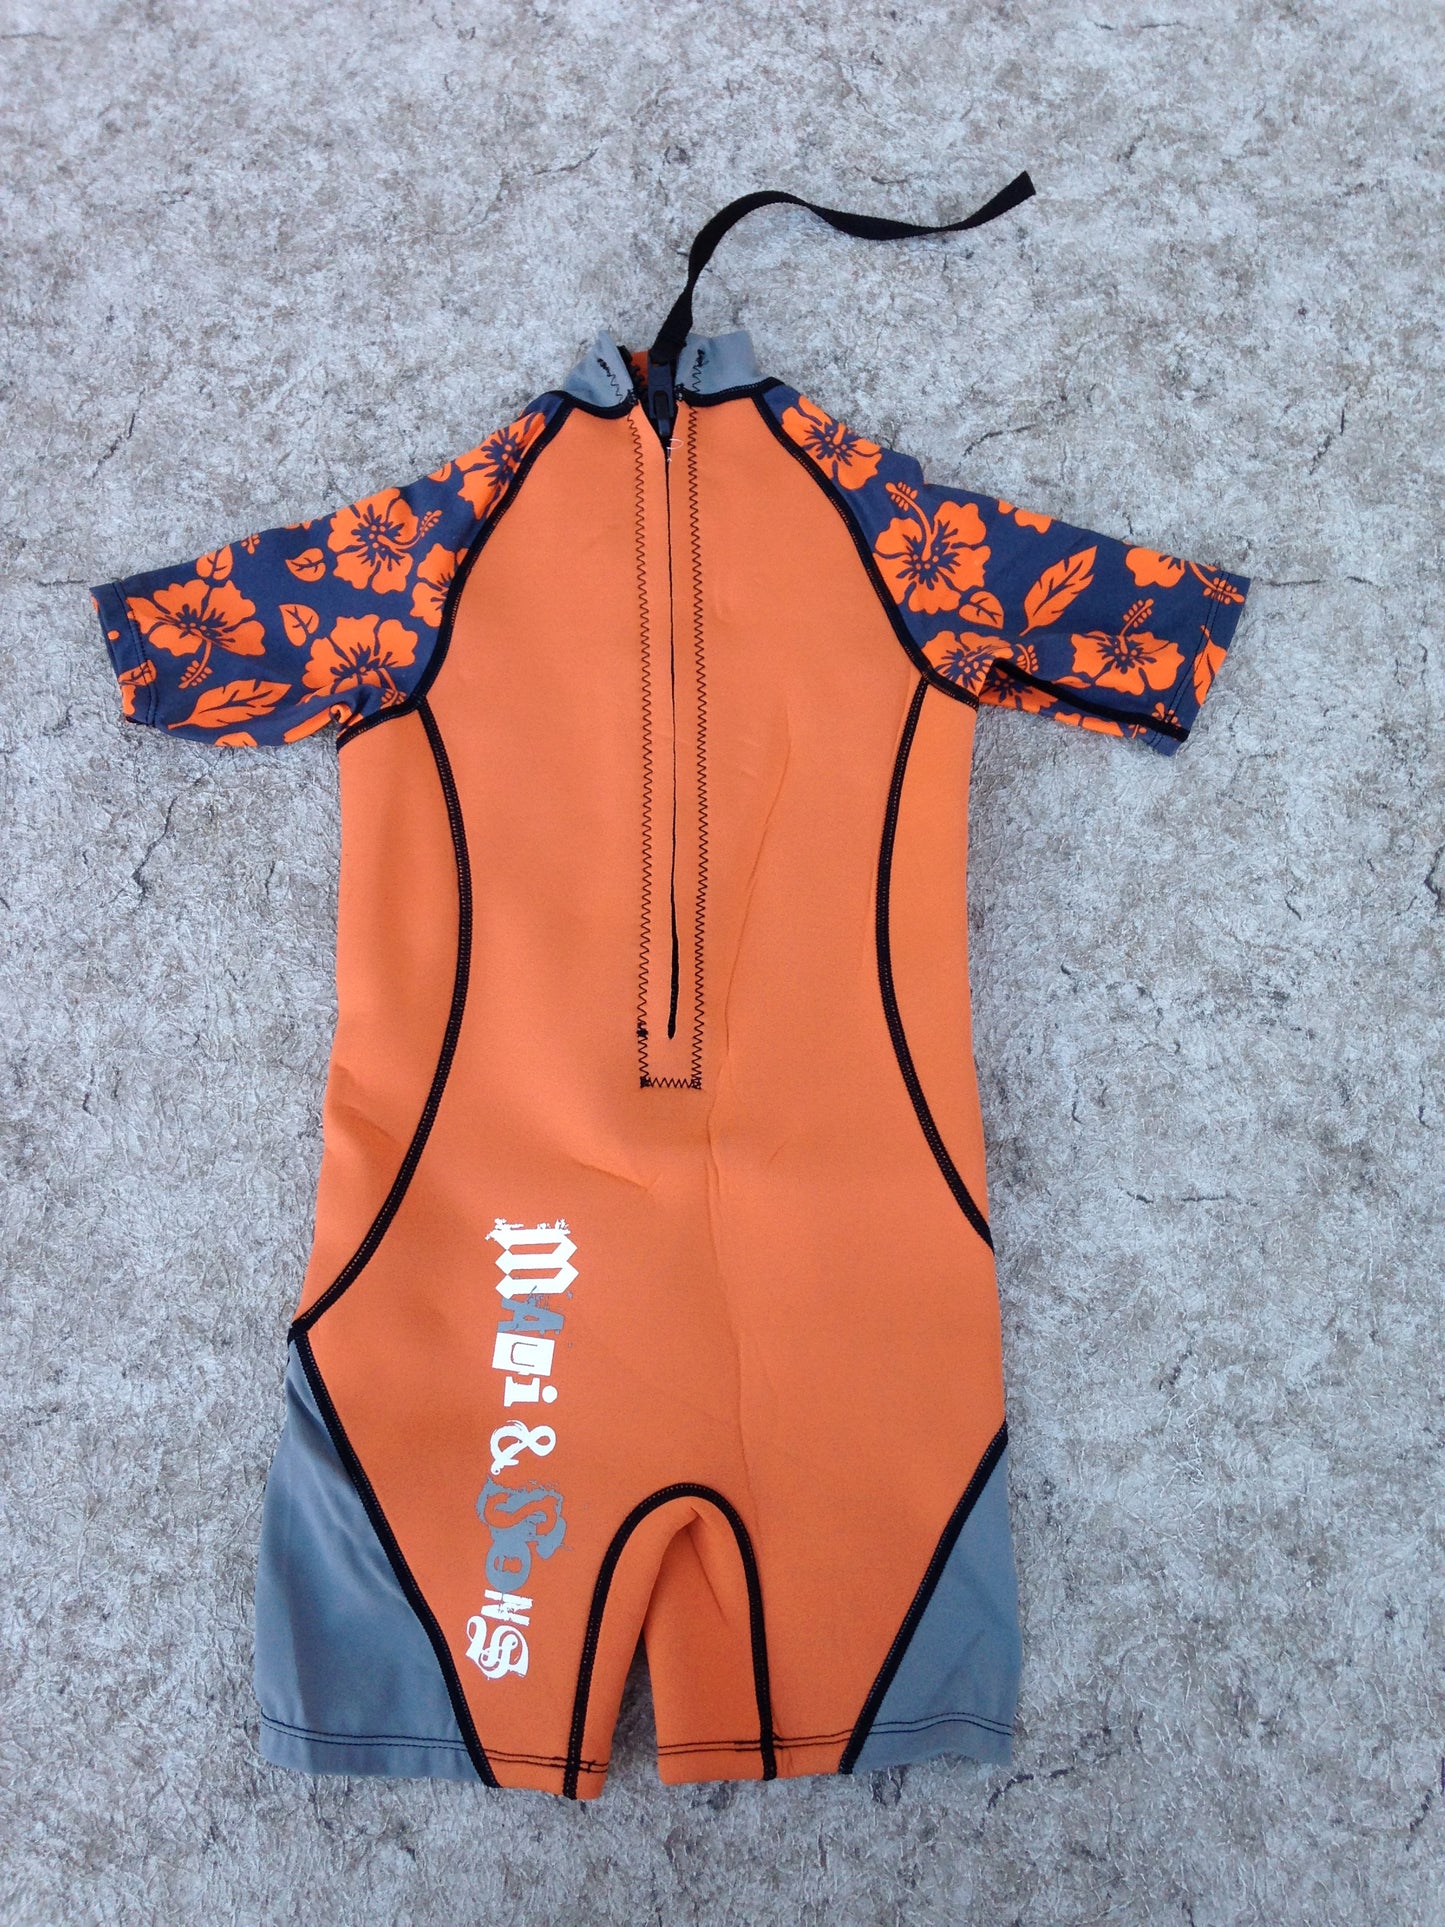 Wetsuit Child Size 8 Maui and Sons Orange Grey 2-3 mm Neoprene